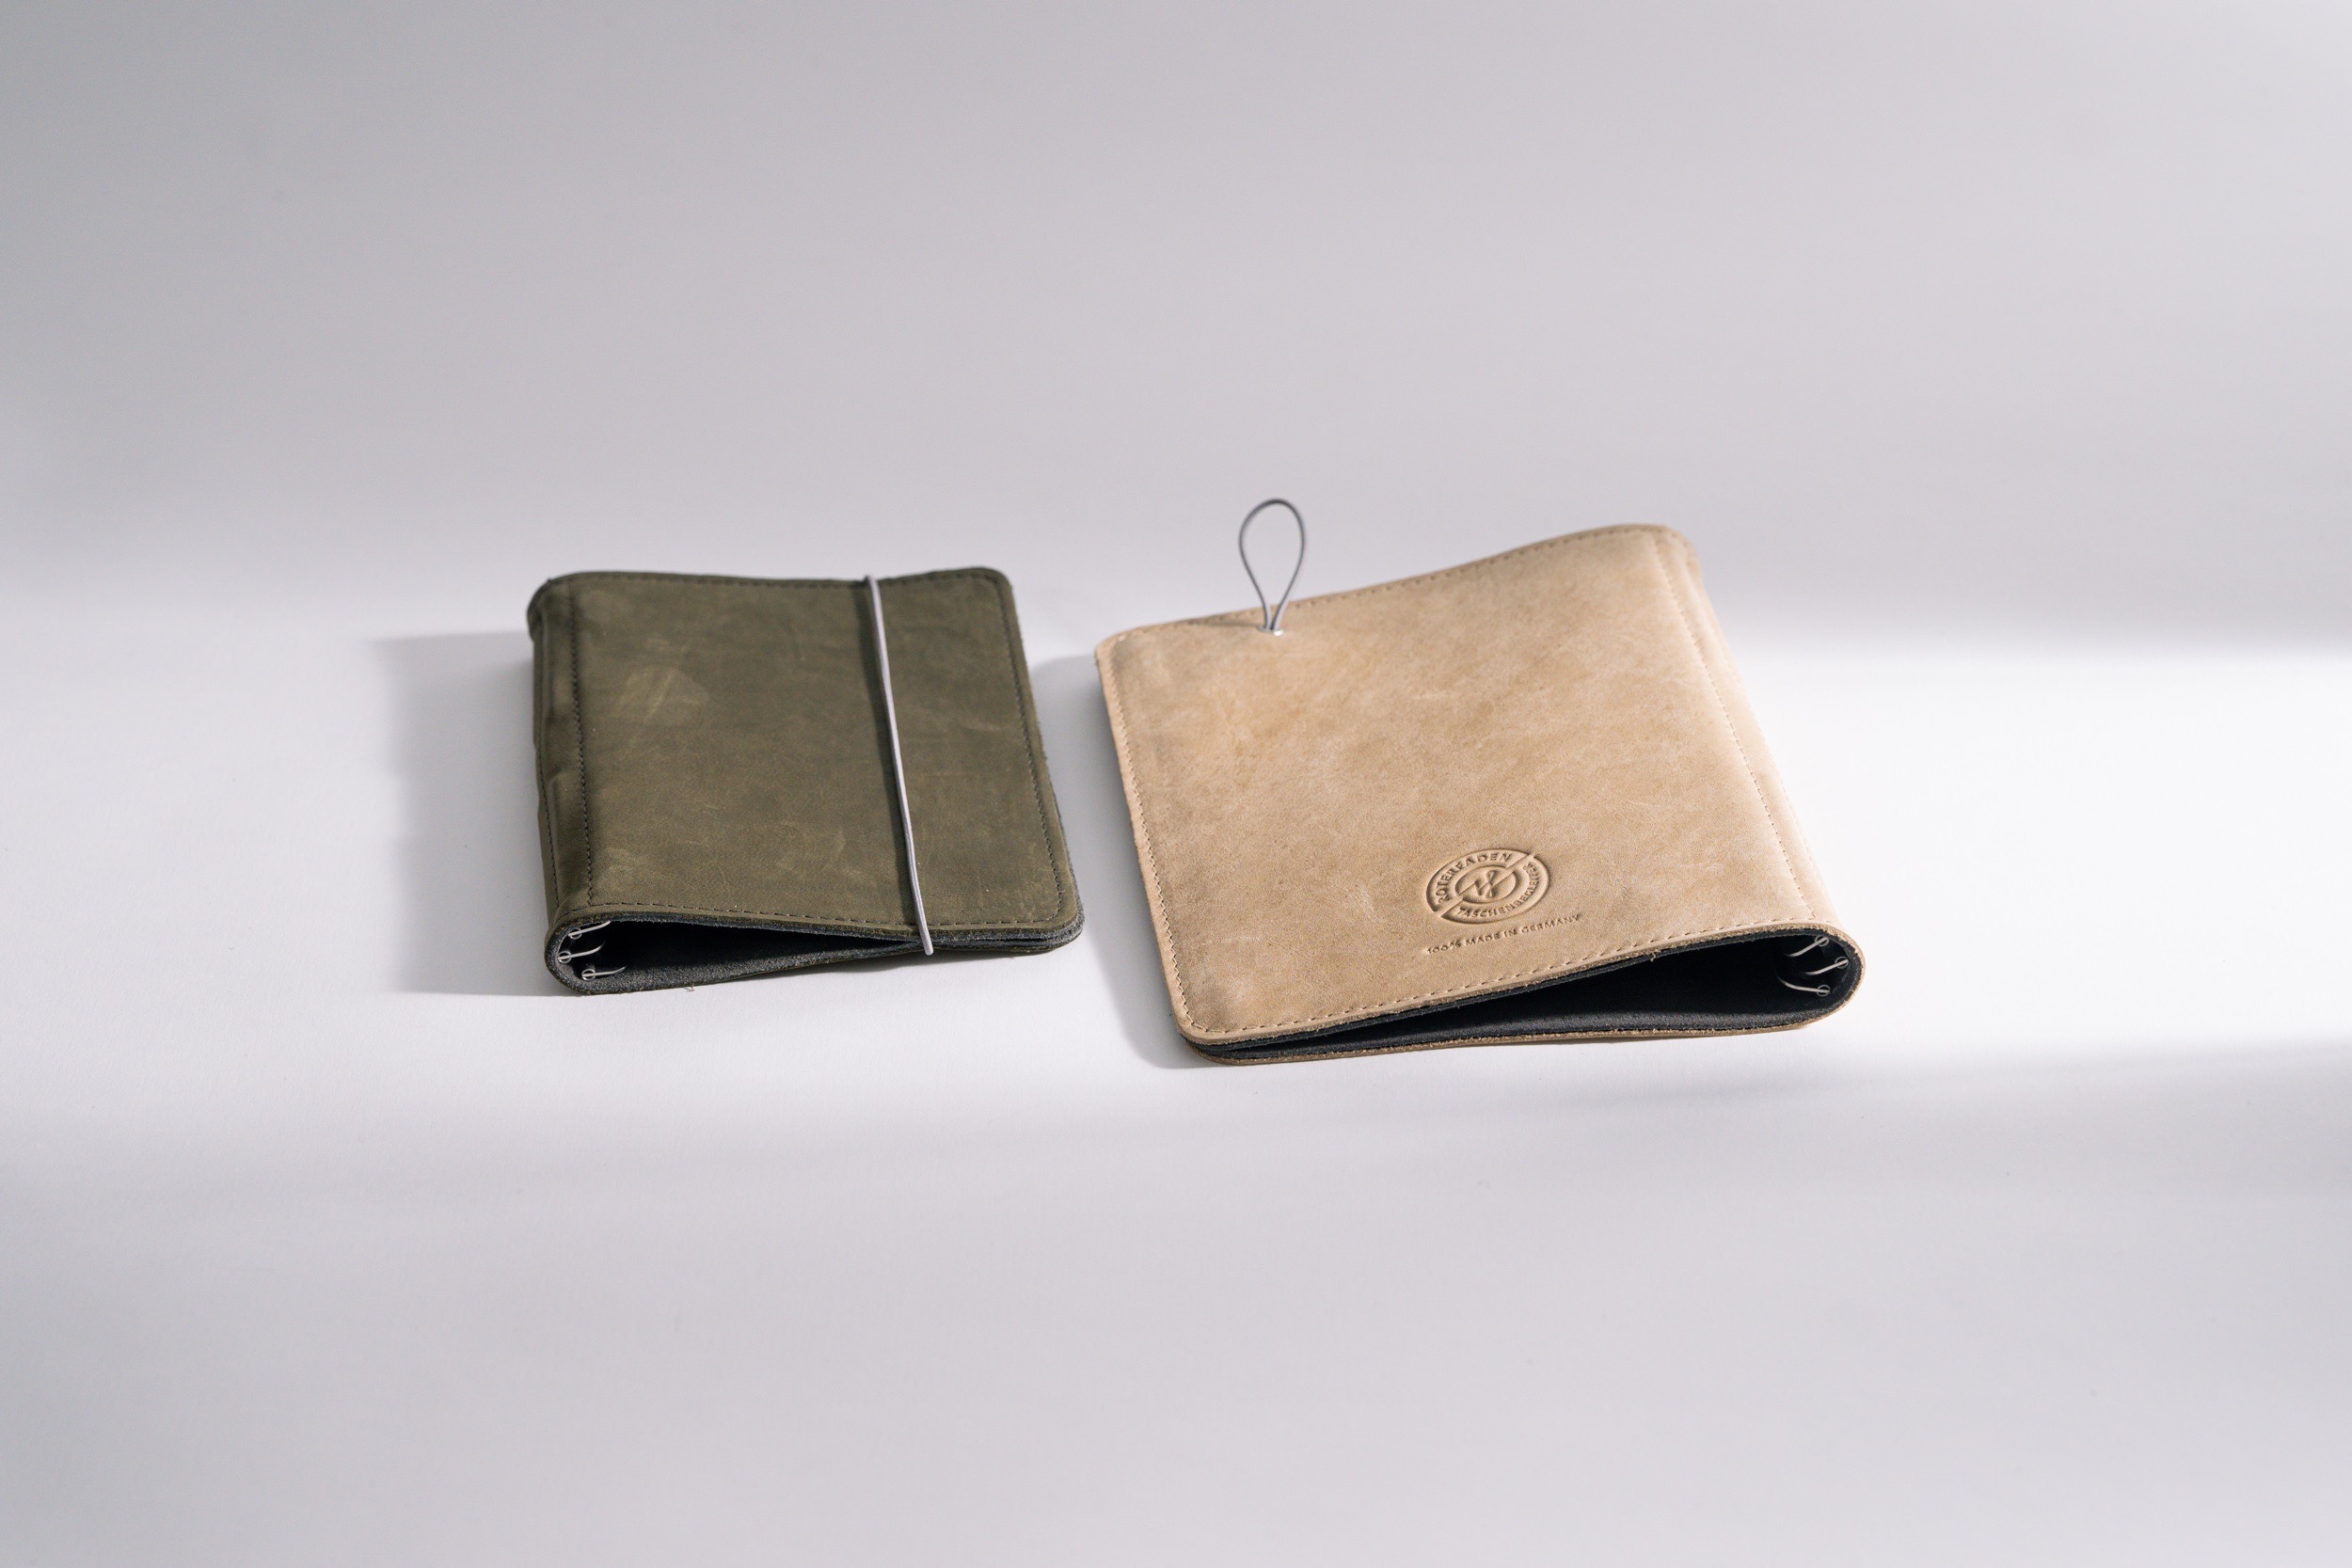 Roterfaden Taschenbegleiter SO_20 Organizer - Lightly sanded leather, chrome-free, and certified with BLAUER ENGEL